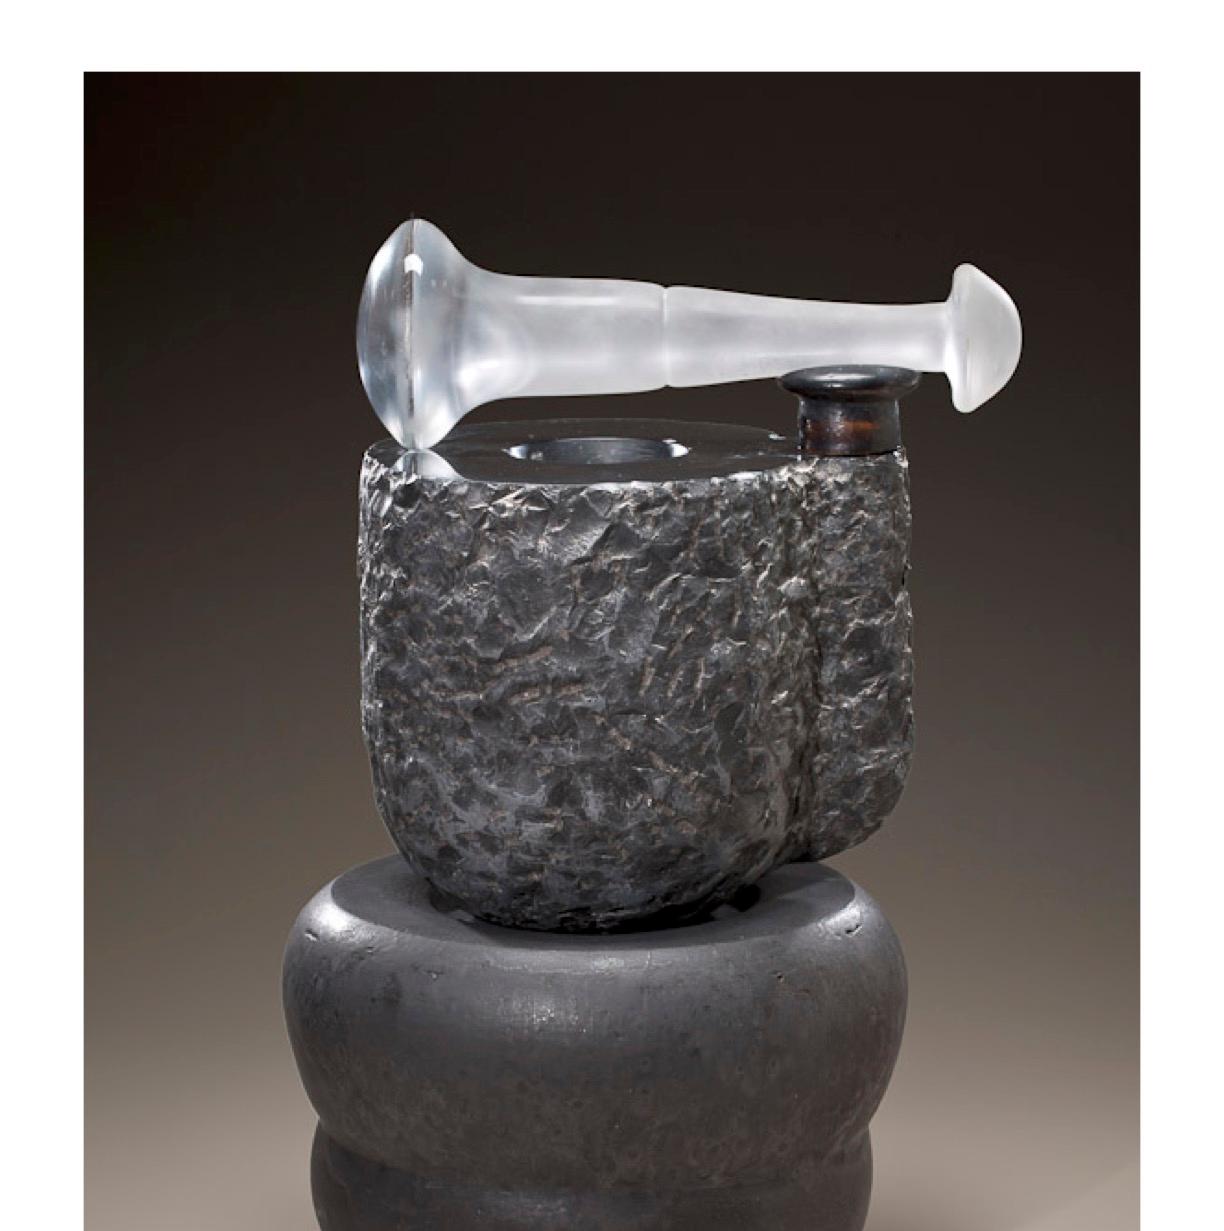 Glazed Richard Hirsch Black Marble Mortar and Glass Pestle Sculpture, 2006 - 2010 For Sale